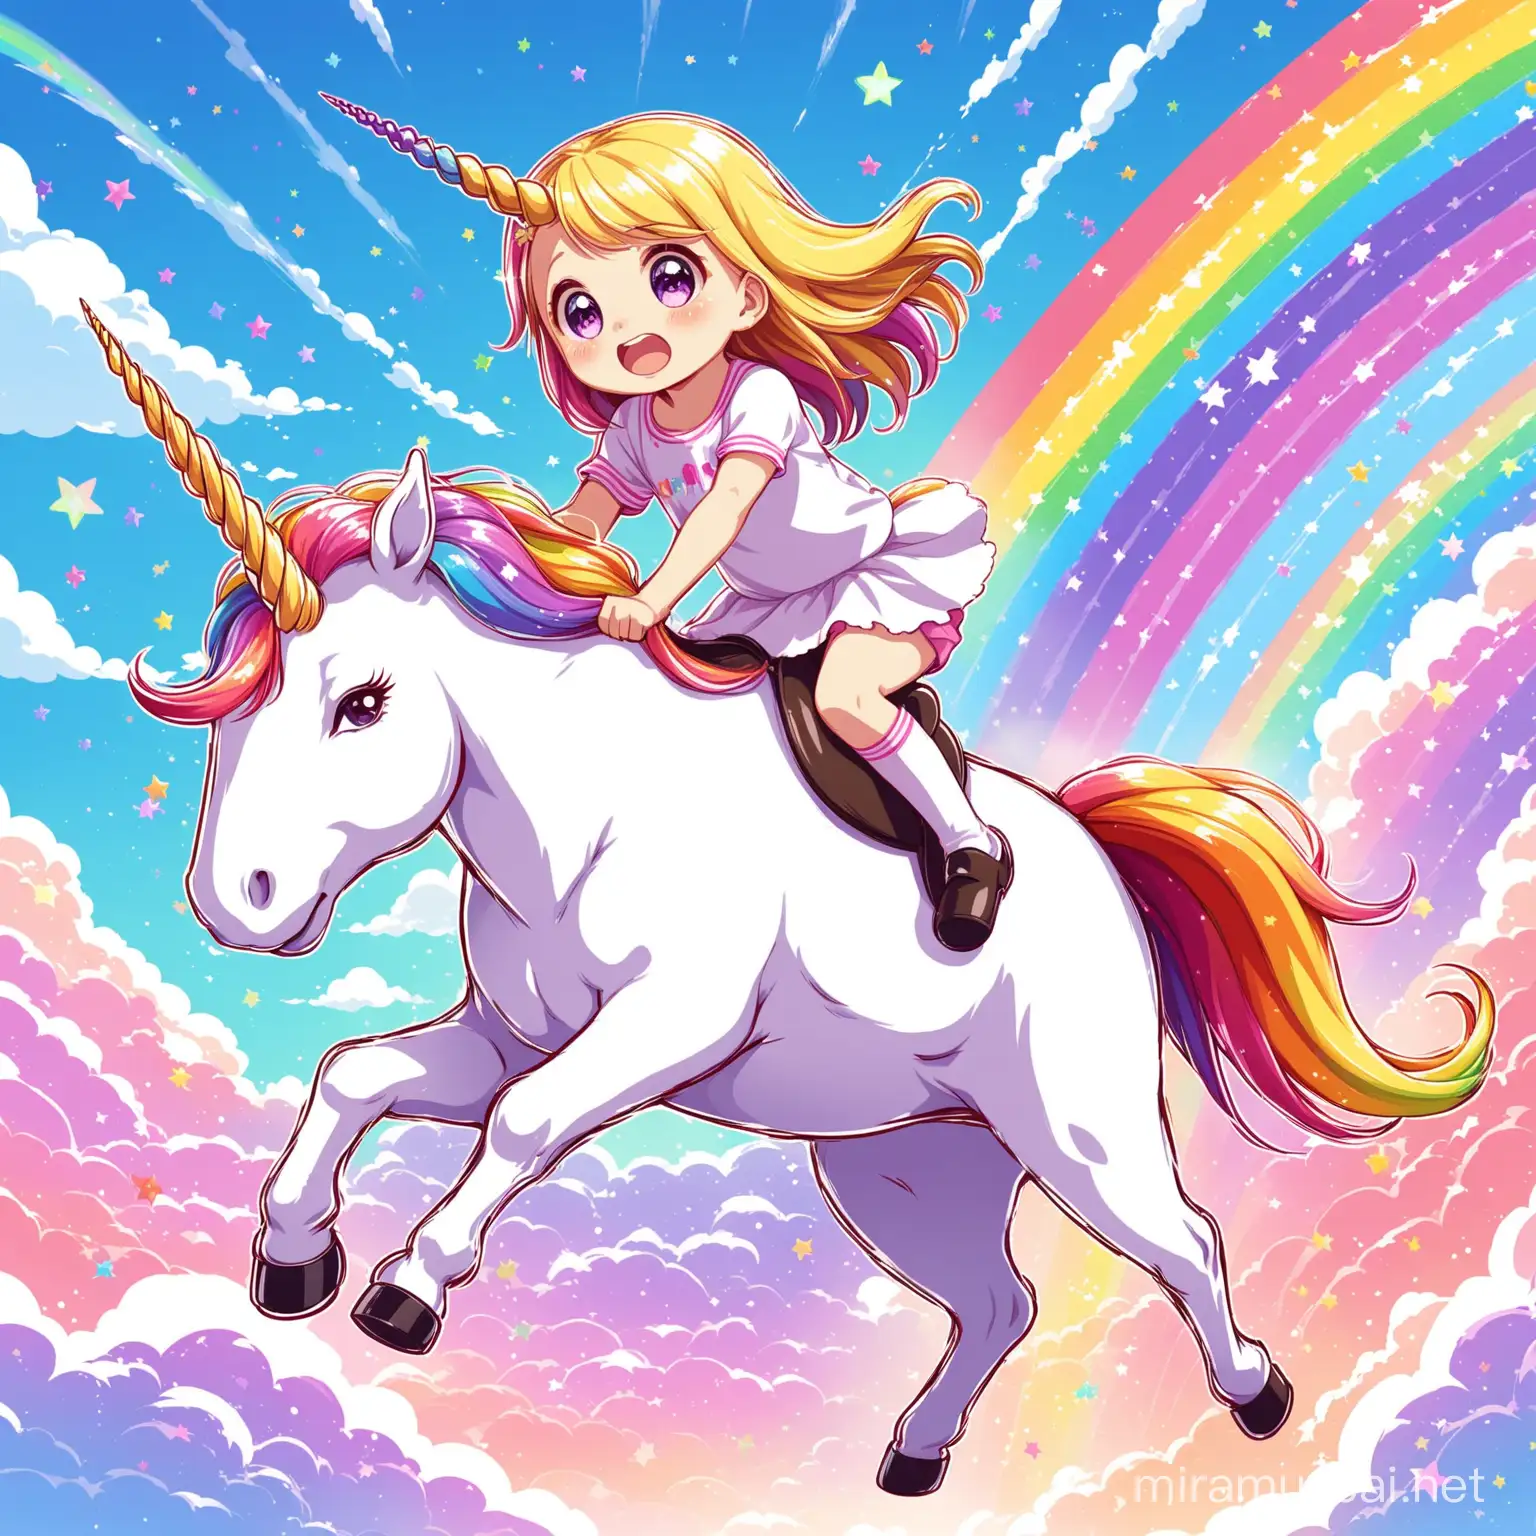 Insane, demented little girl riding a unicorn through a rainbow